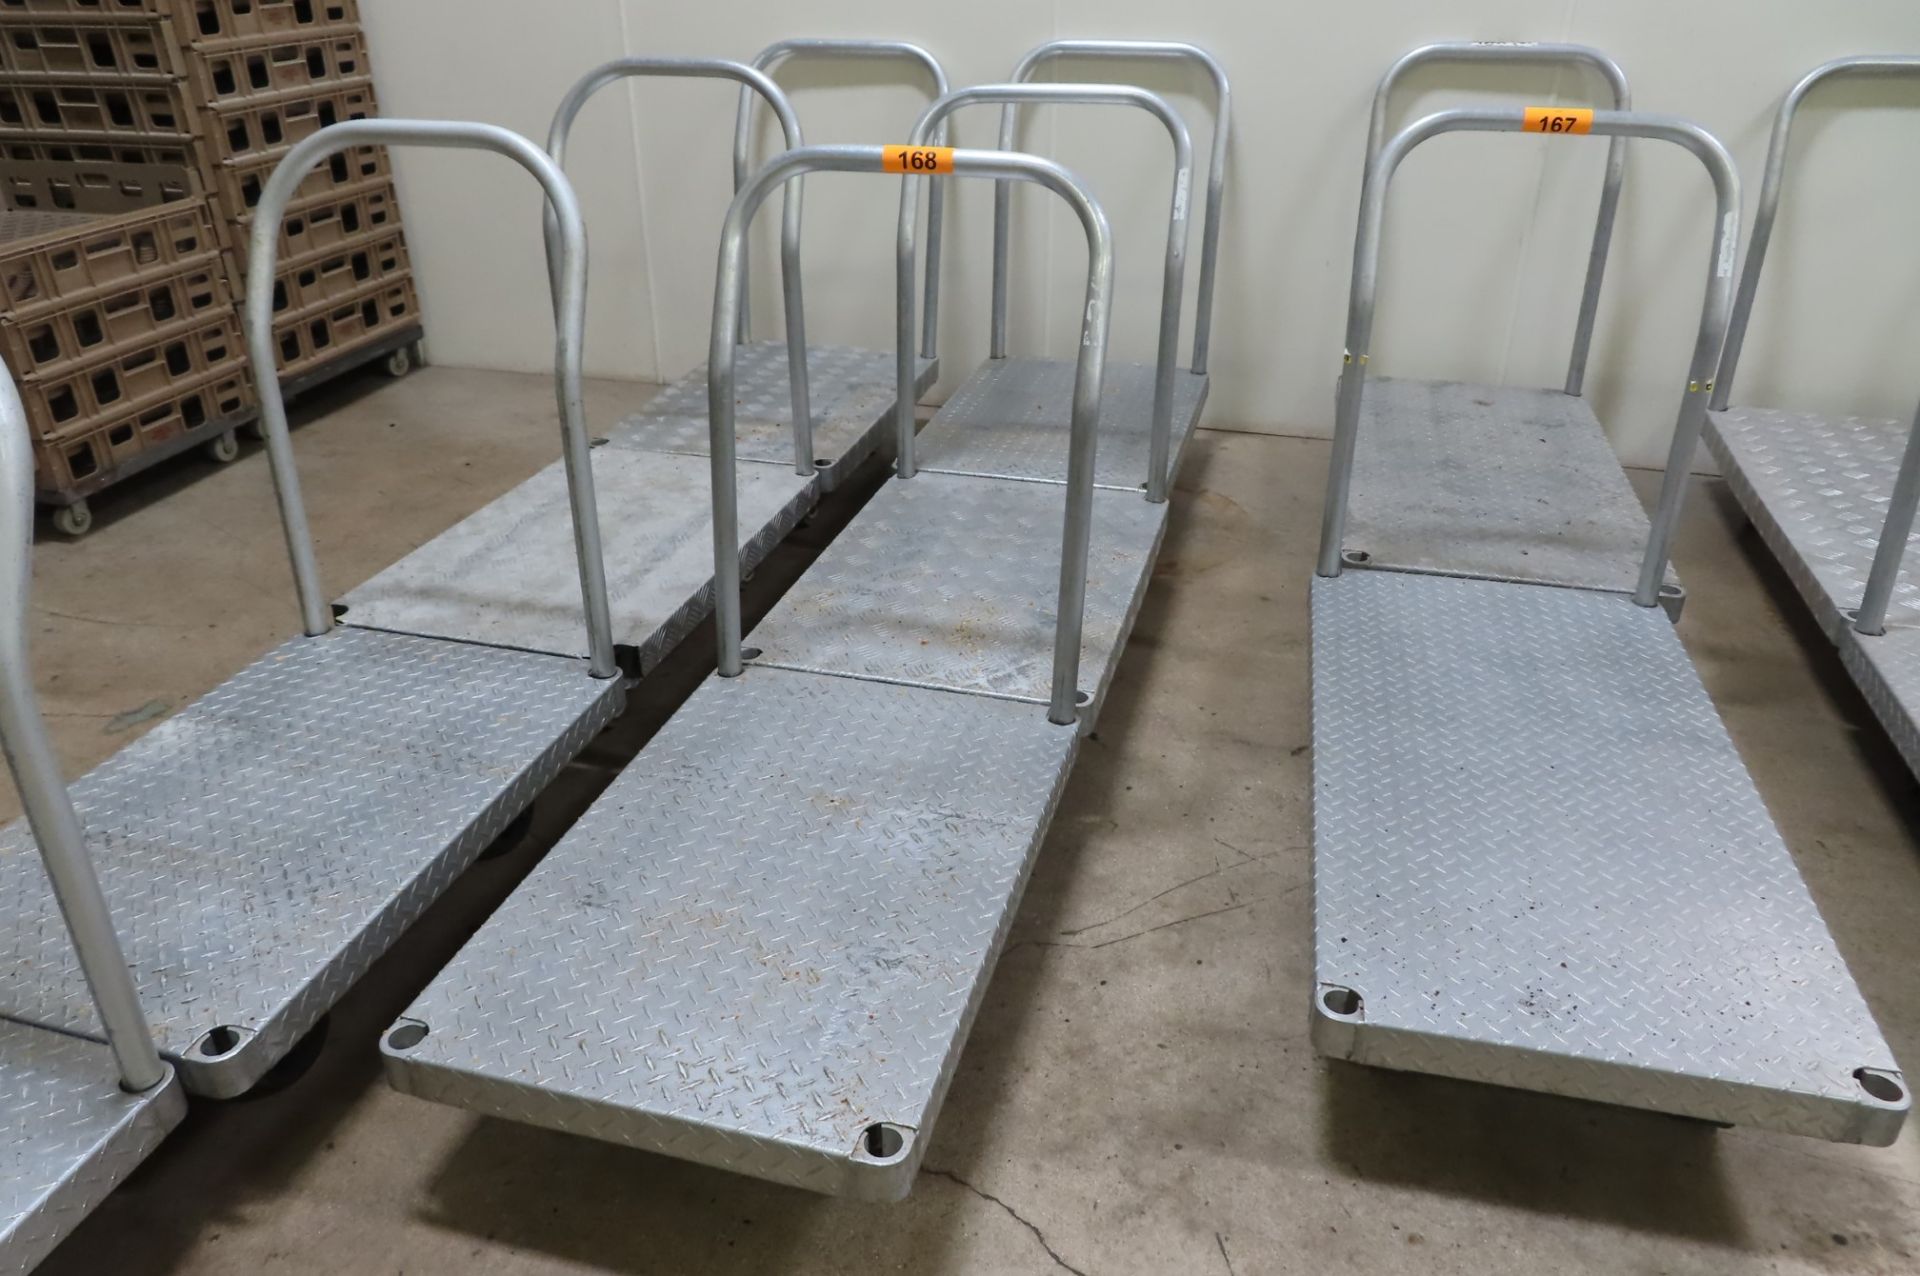 Flatbed carts